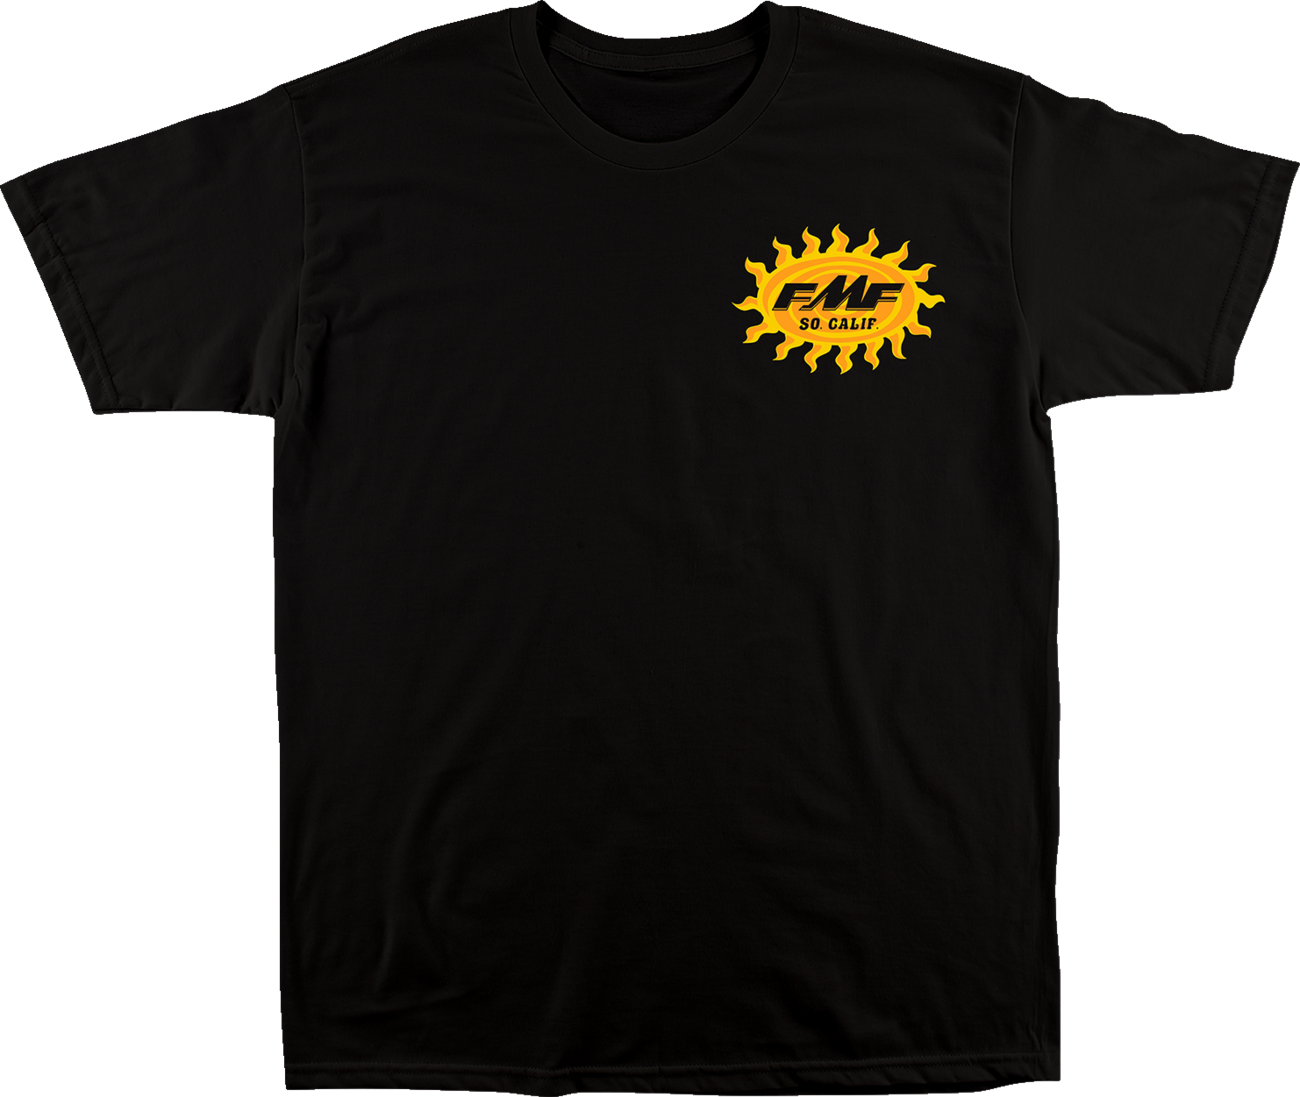 FMF Sunny T-Shirt - Black - Small SP22118907BKSM 3030-21876